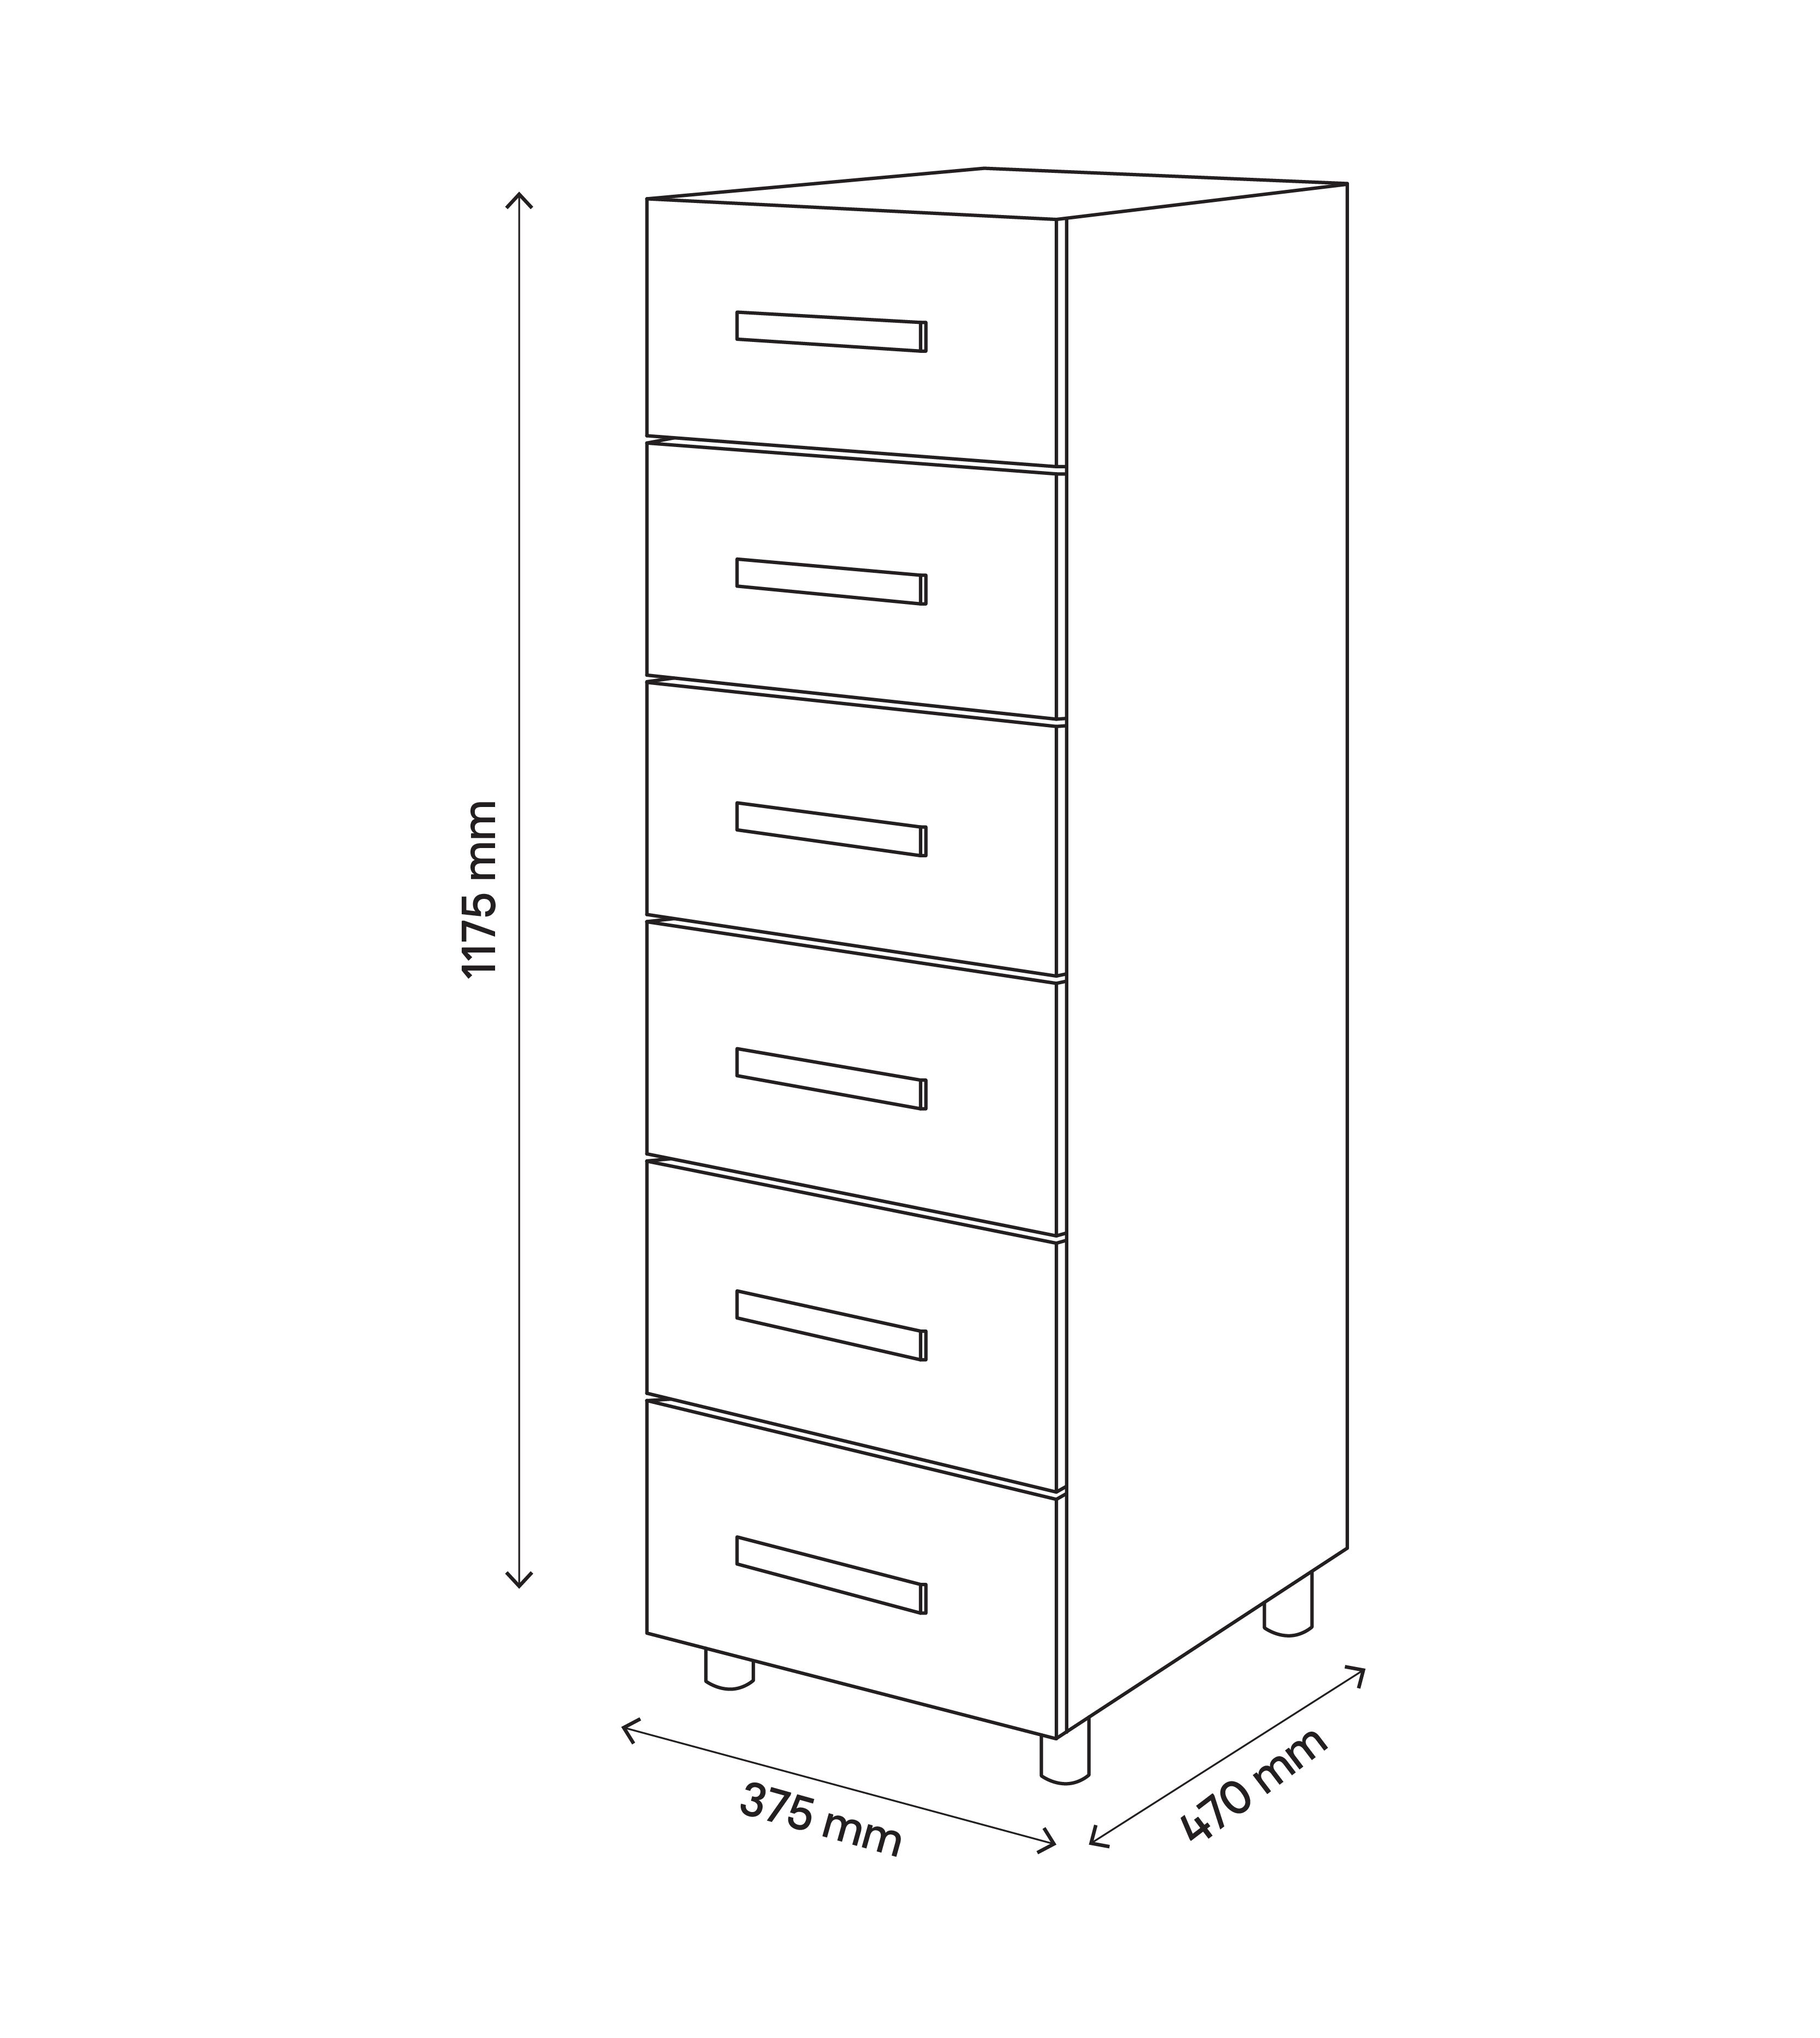 Atomia Freestanding Matt grey oak effect 6 Drawer Chest of drawers (H)1125mm (W)375mm (D)450mm